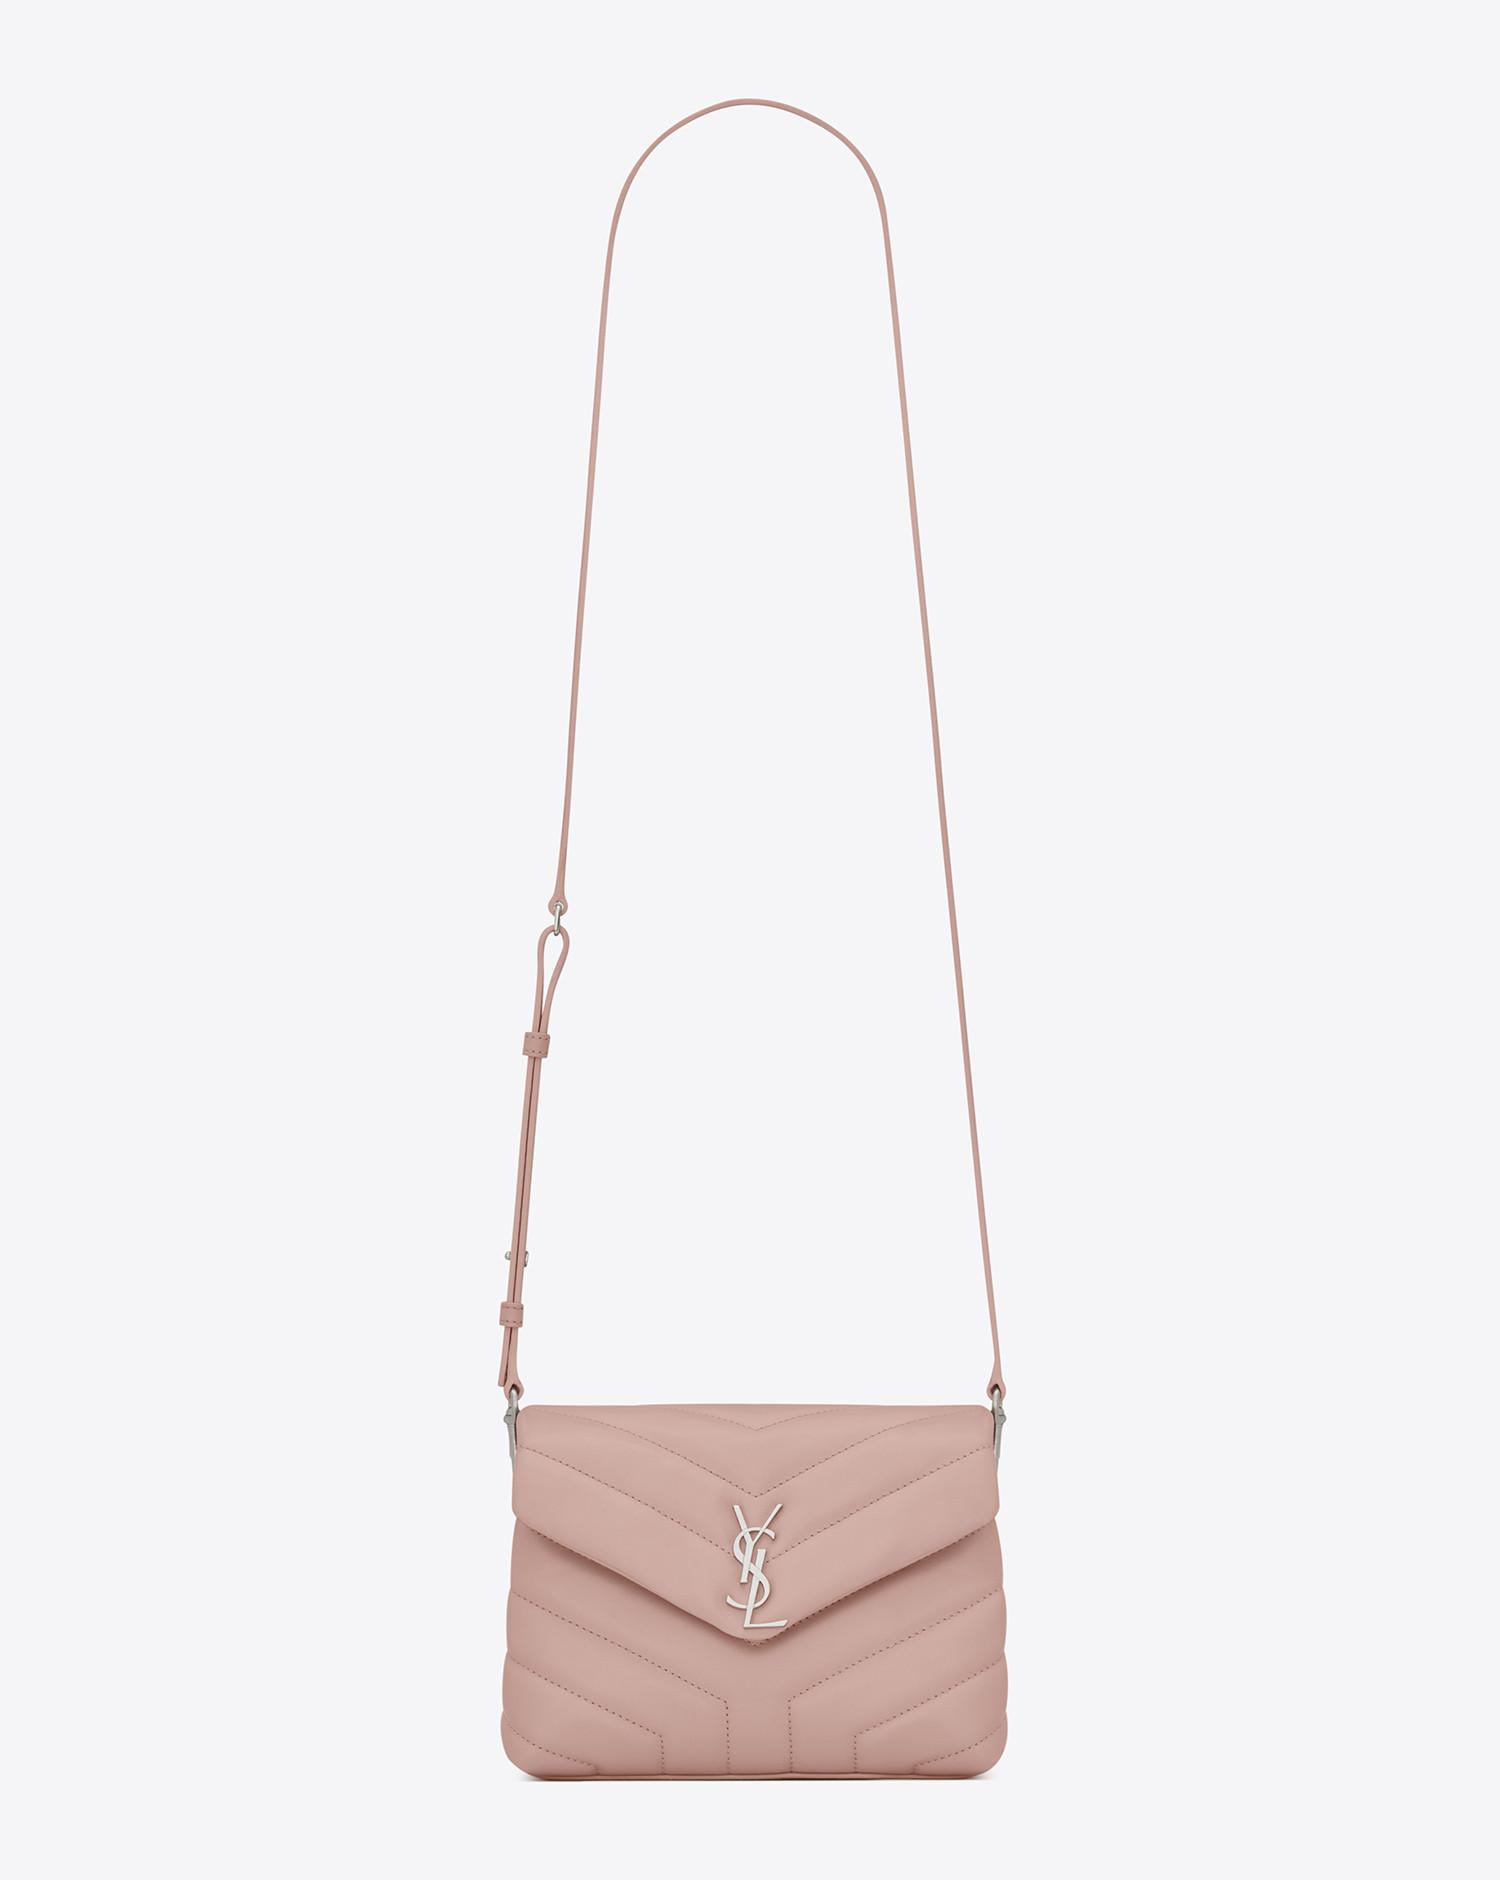 Yves Saint Laurent Loulou Toy Matelasse Leather Crossbody Bag